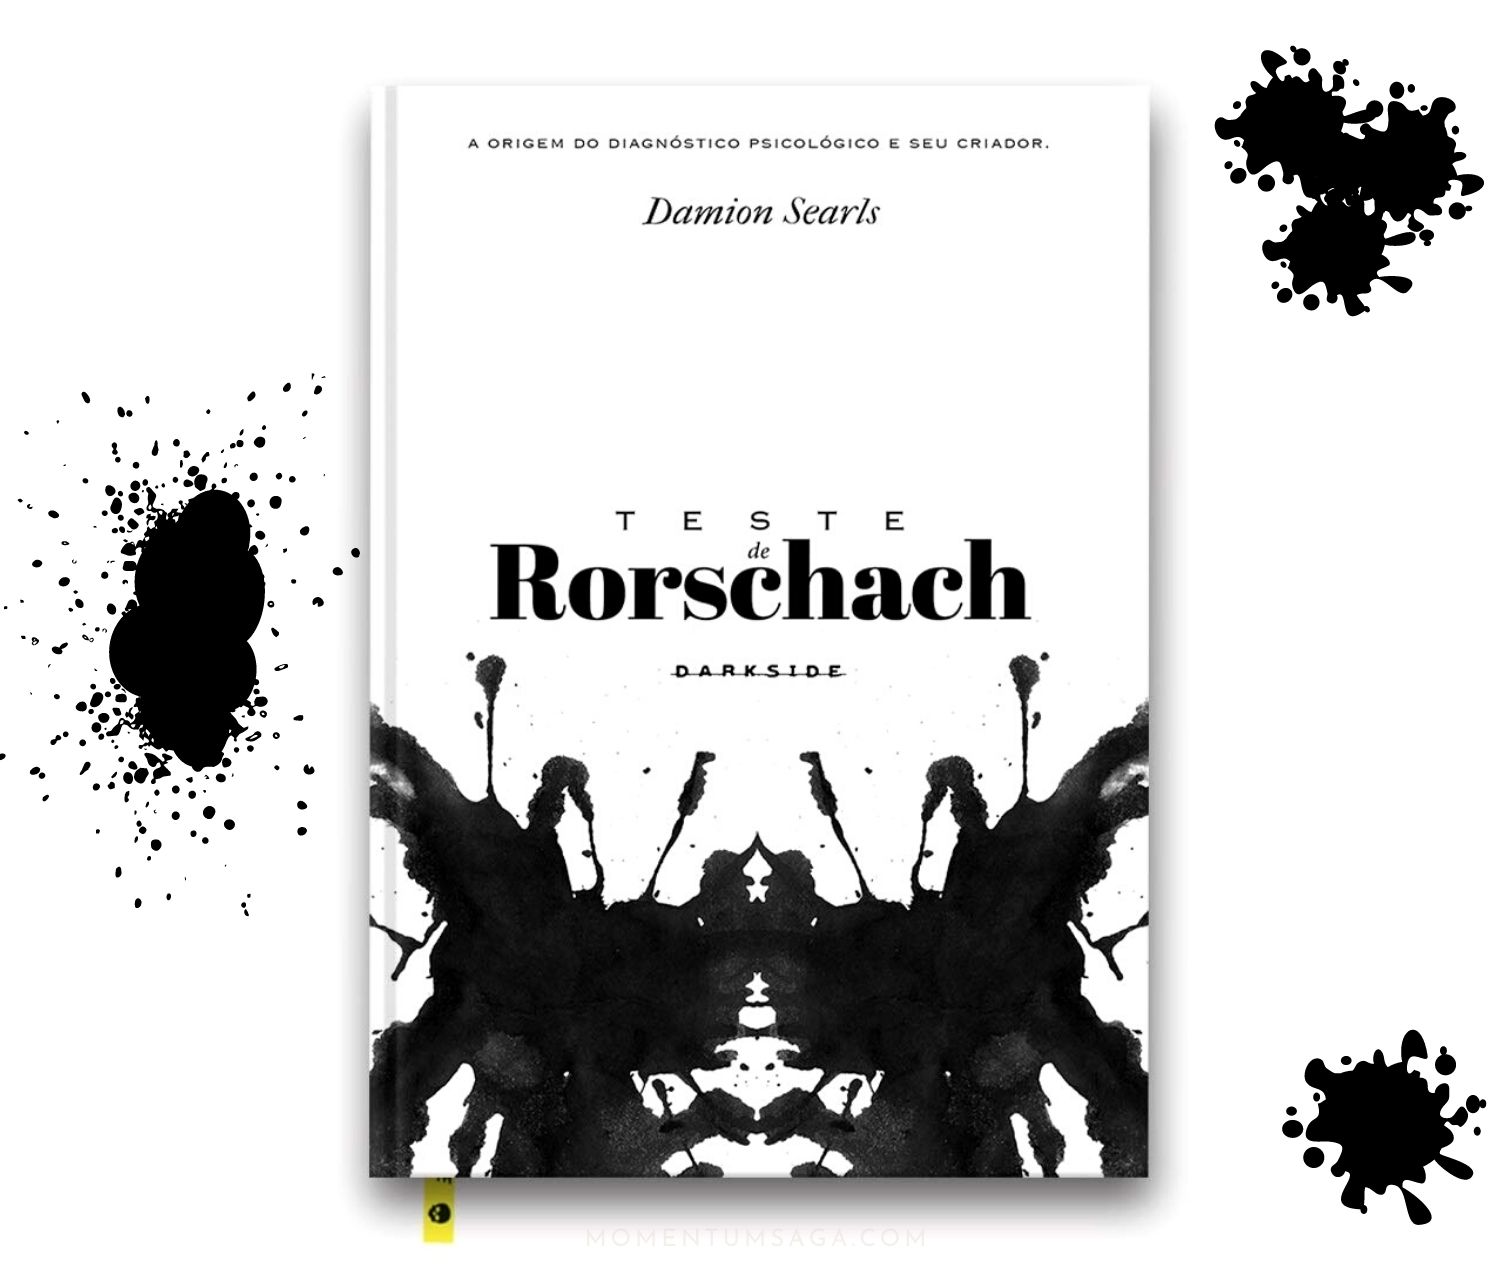 Resenha: Teste de Rorschach - A Origem, de Damion Searls